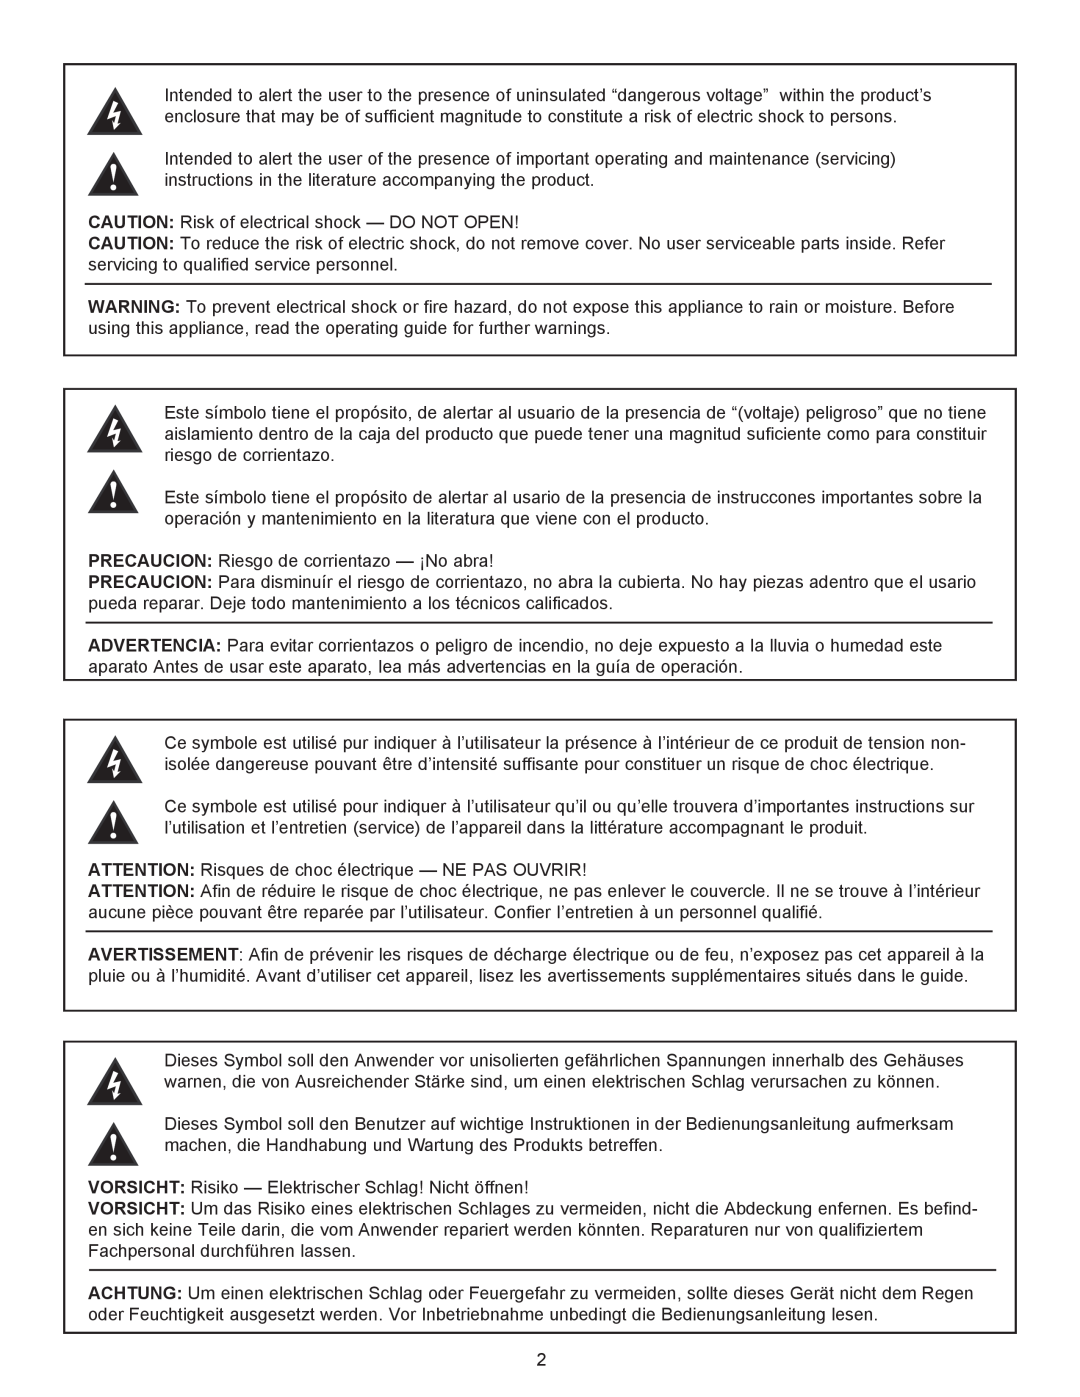 Peavey Automix2 manual CAUTION Risk of electrical shock Ñ DO NOT OPEN, PRECAUCION Riesgo de corrientazo Ñ ÁNo abra 